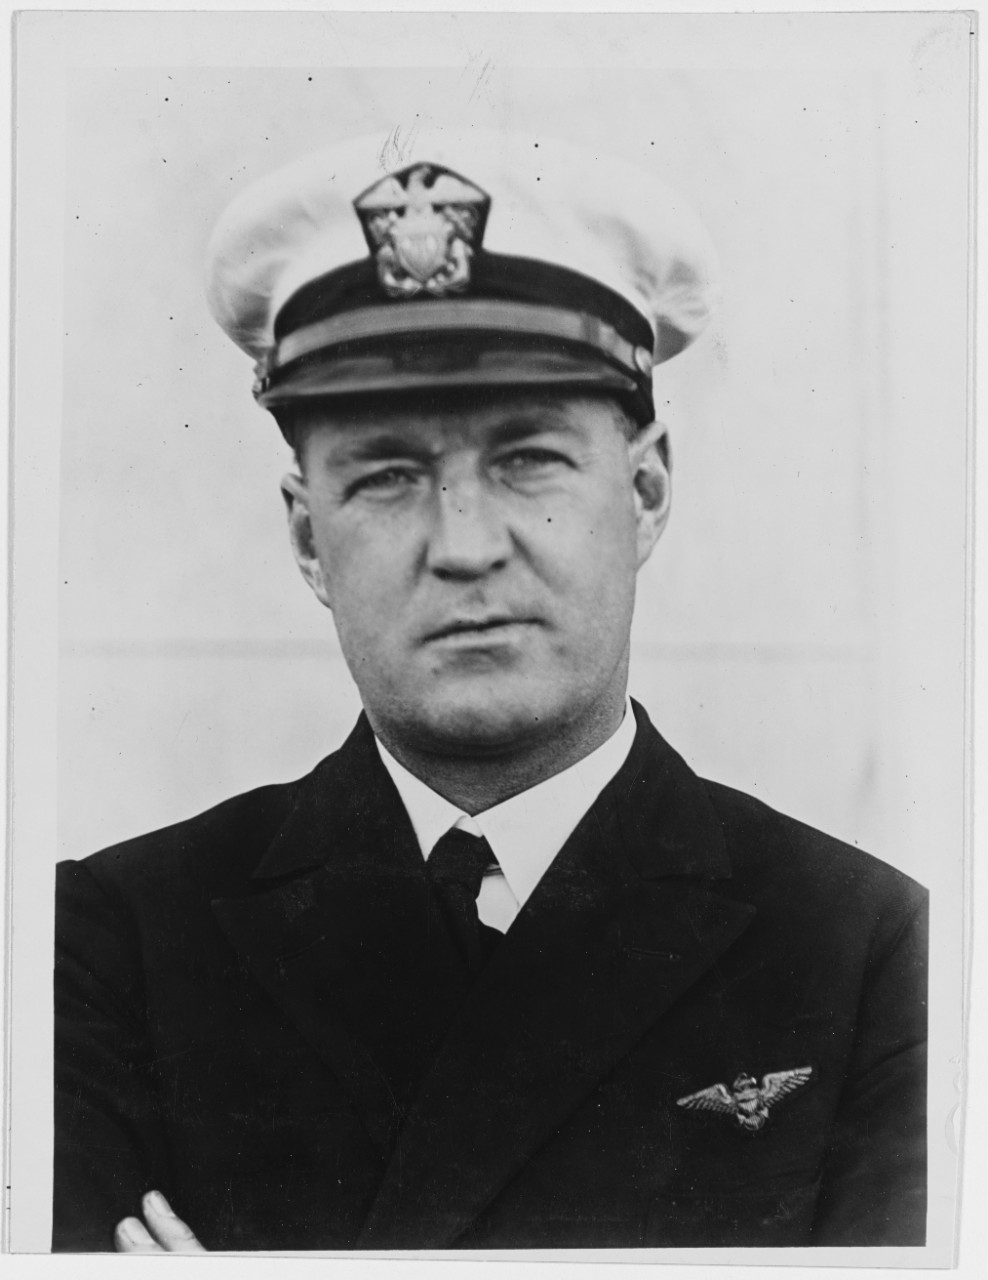 Lieutenant Commander James H. Strong, USN, naval aviator